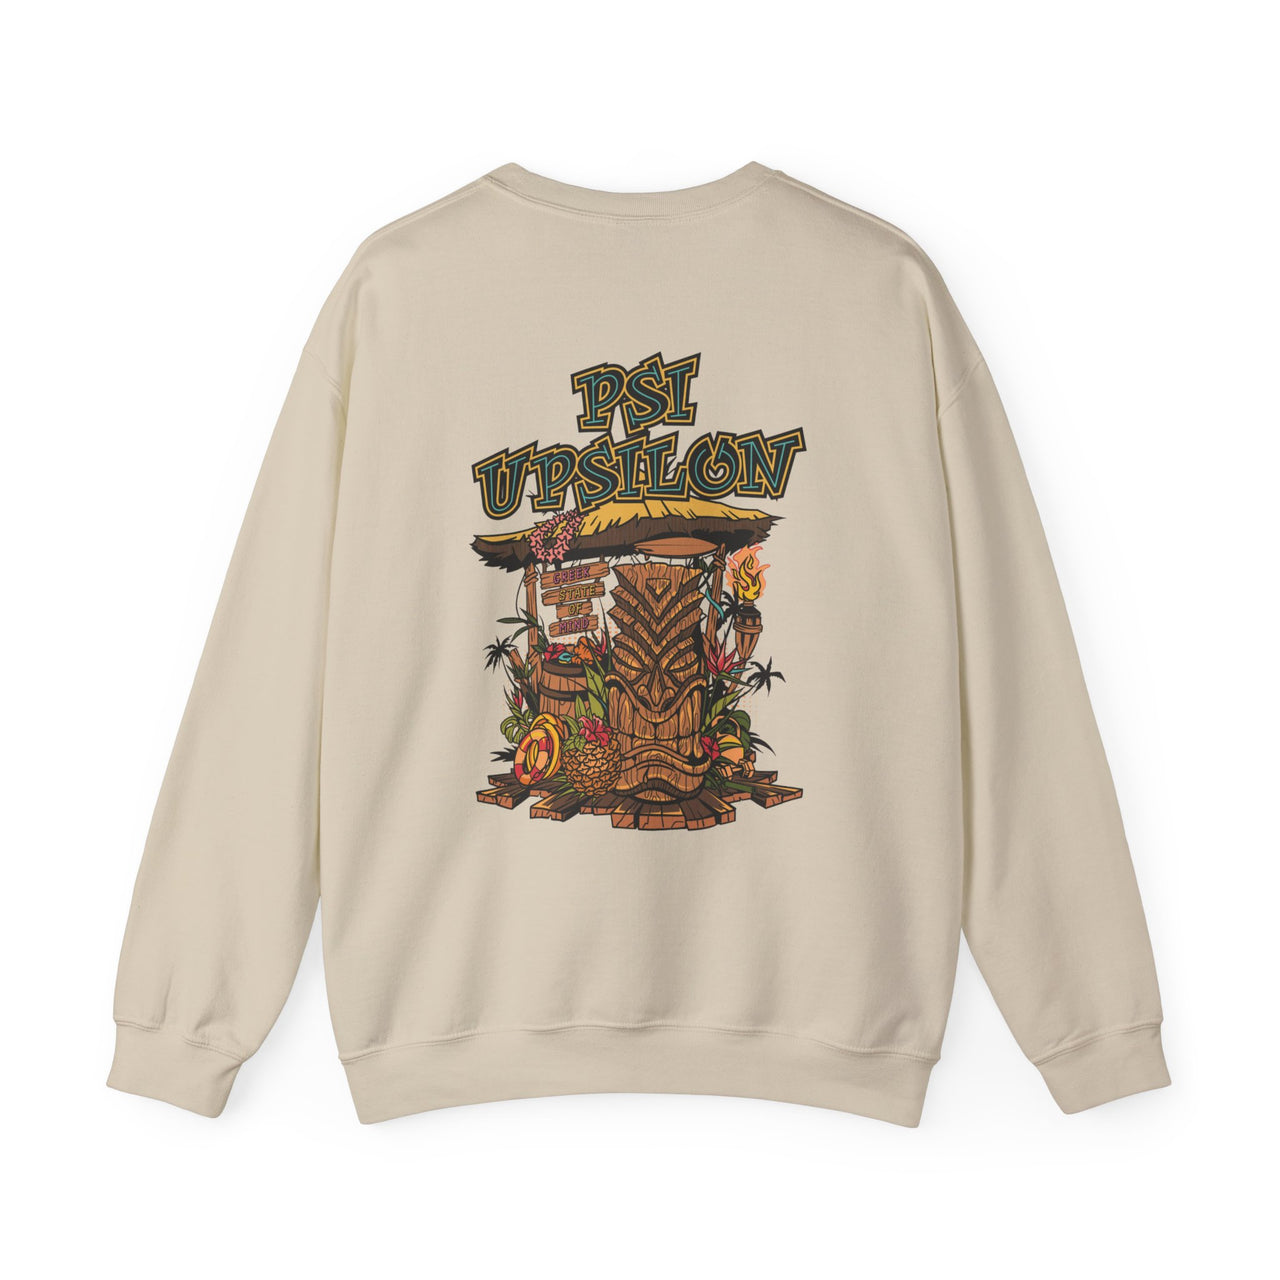 Psi Upsilon Graphic Crewneck Sweatshirt | Tiki Time